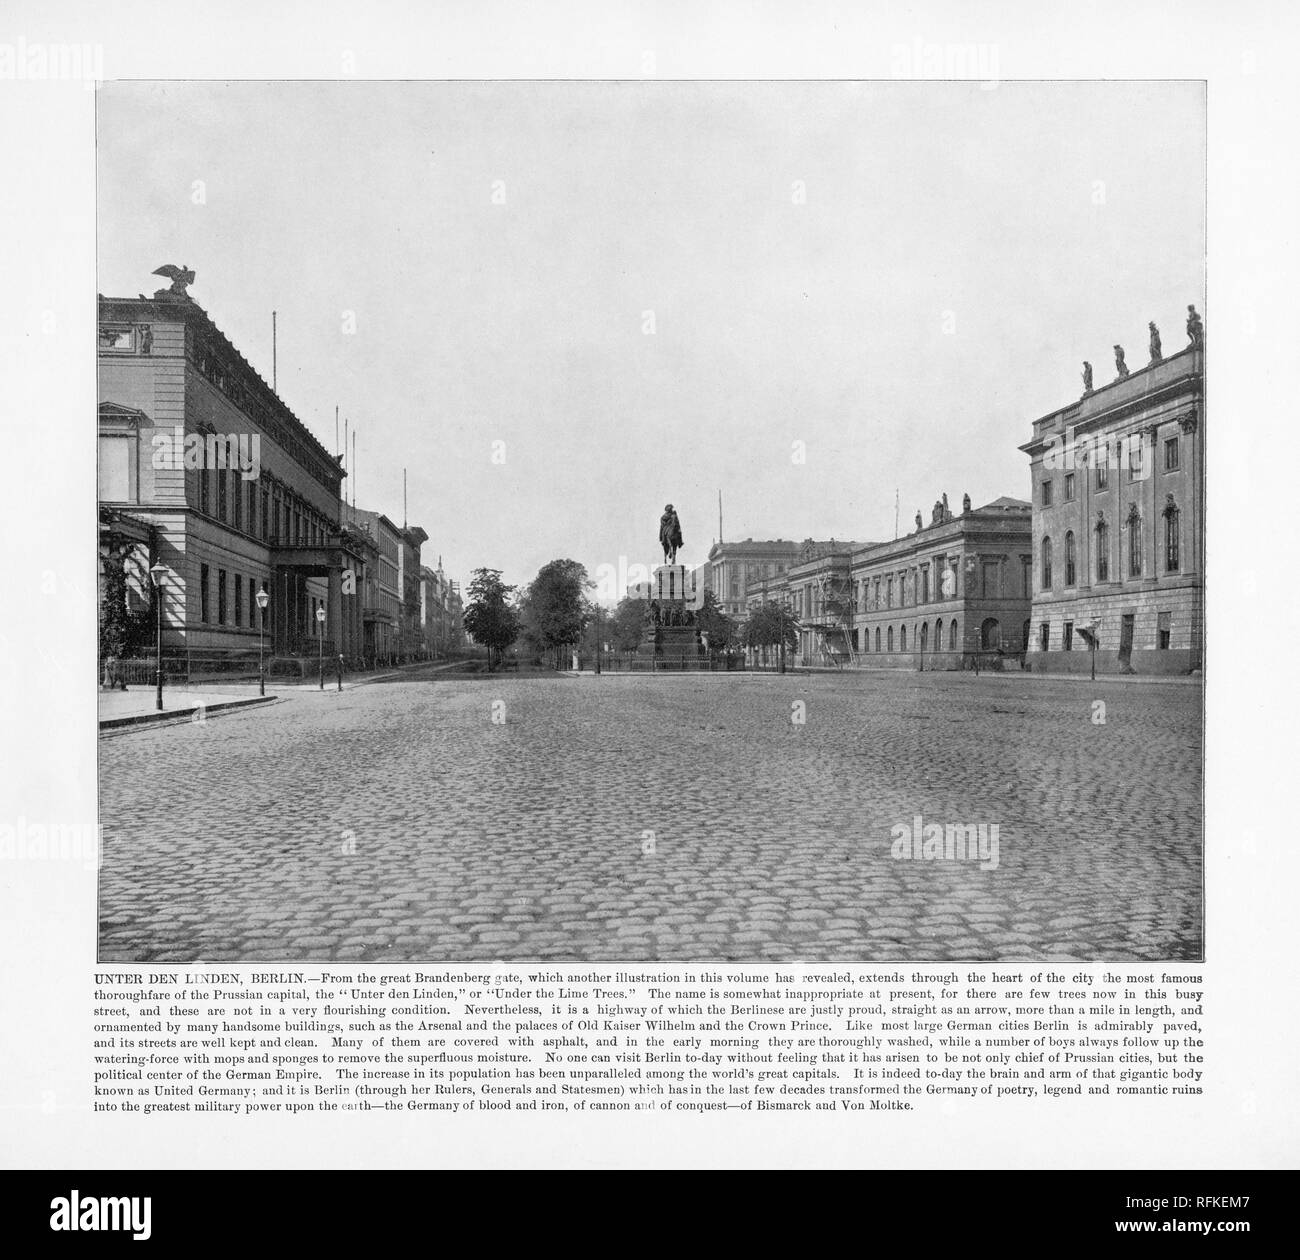 Unter Den Linden, Berlin, Germany, Antique German Photograph, 1893 Stock Photo